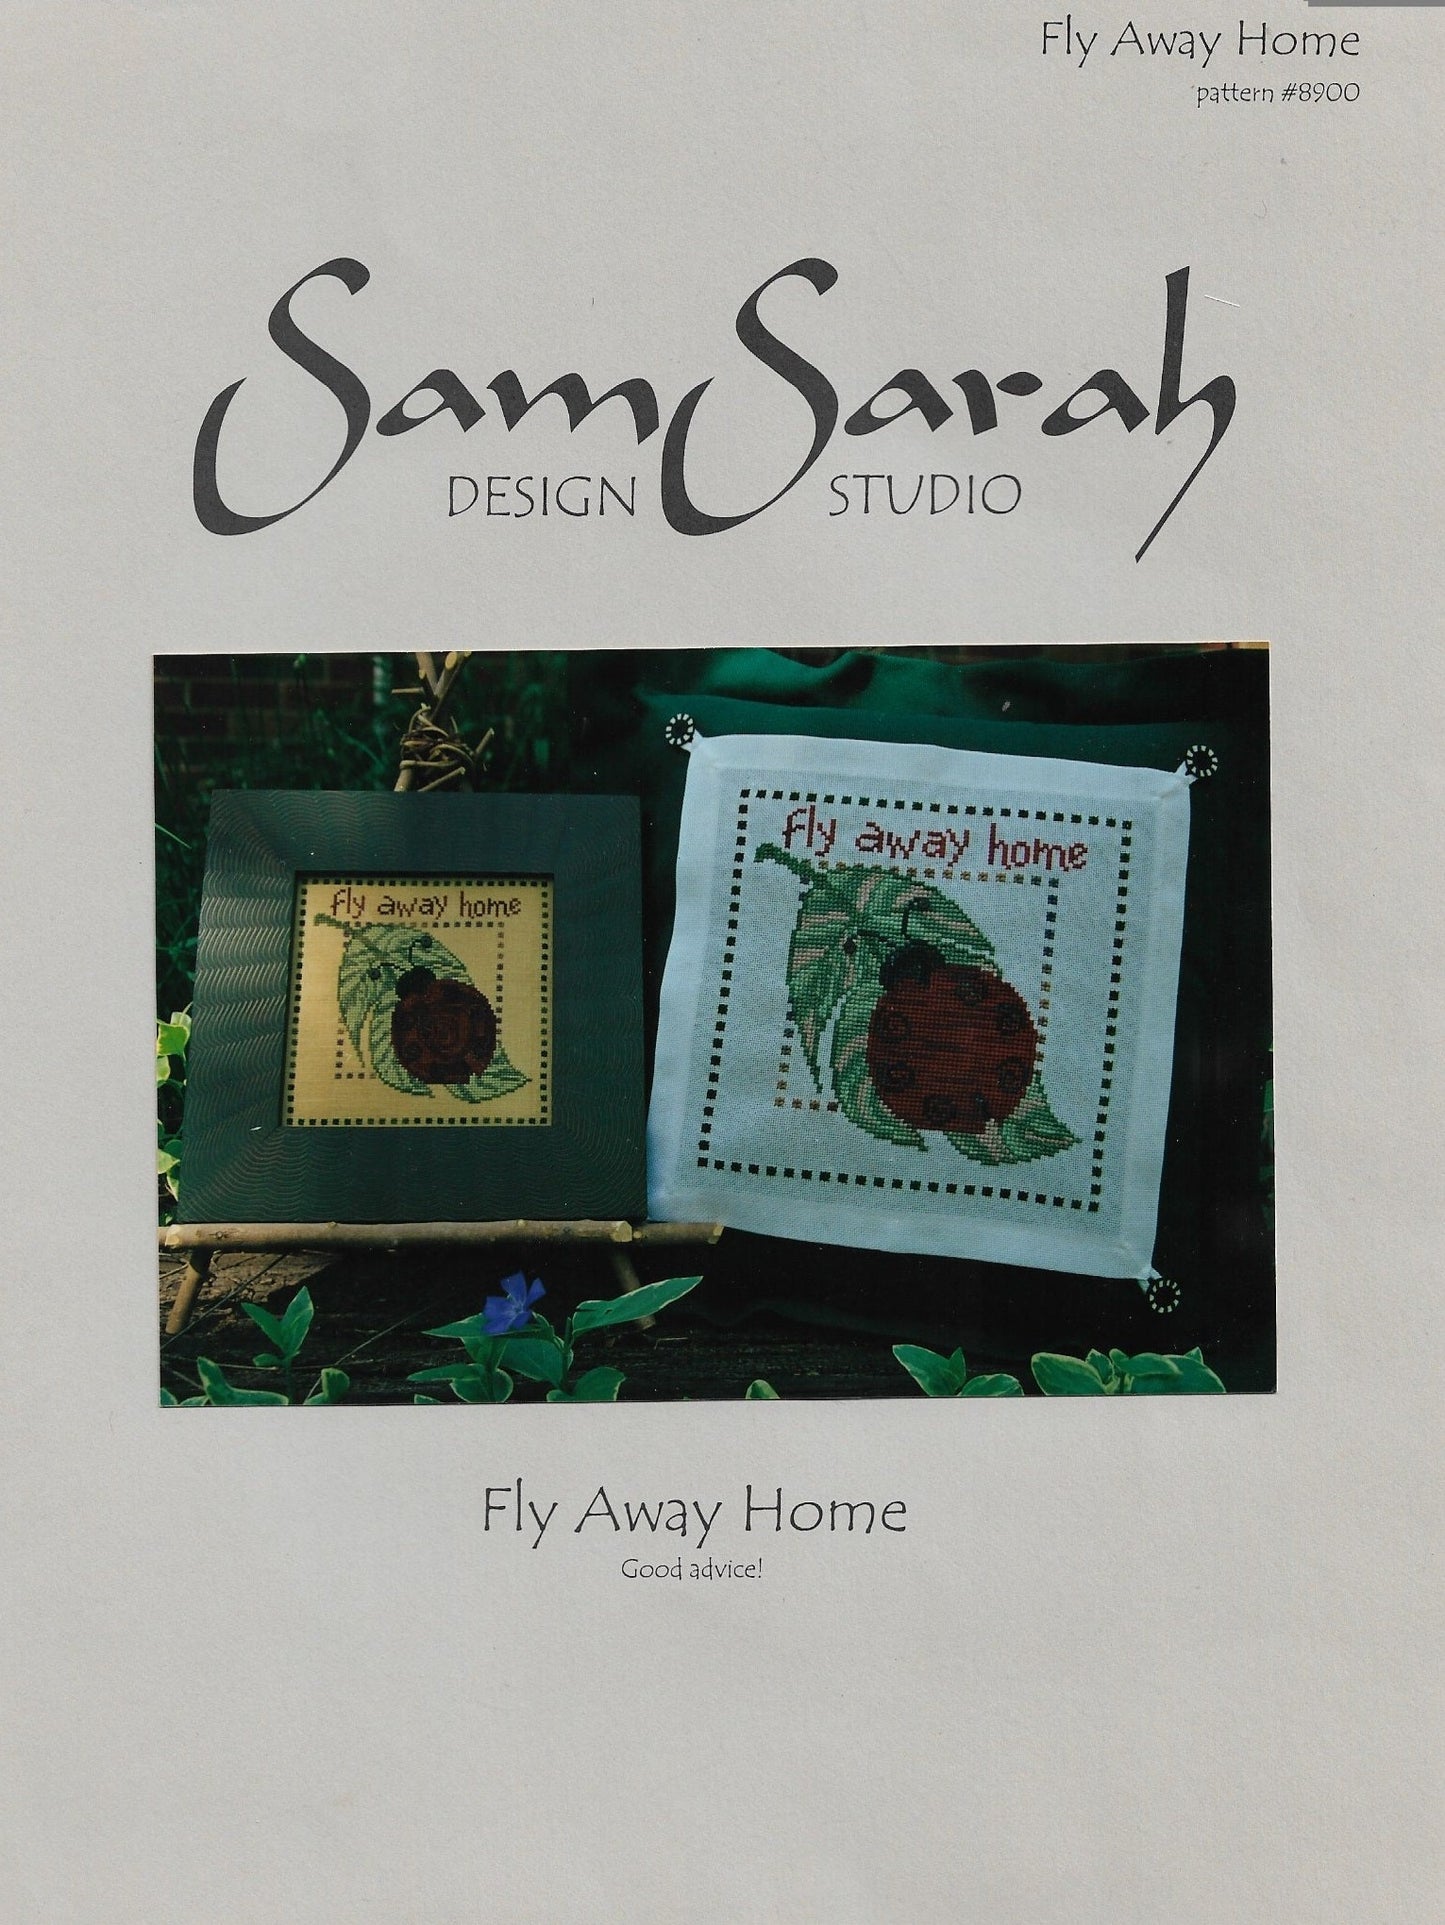 Sam Sarah Fly Away Home 8900 Ladybug cross stitch pattern